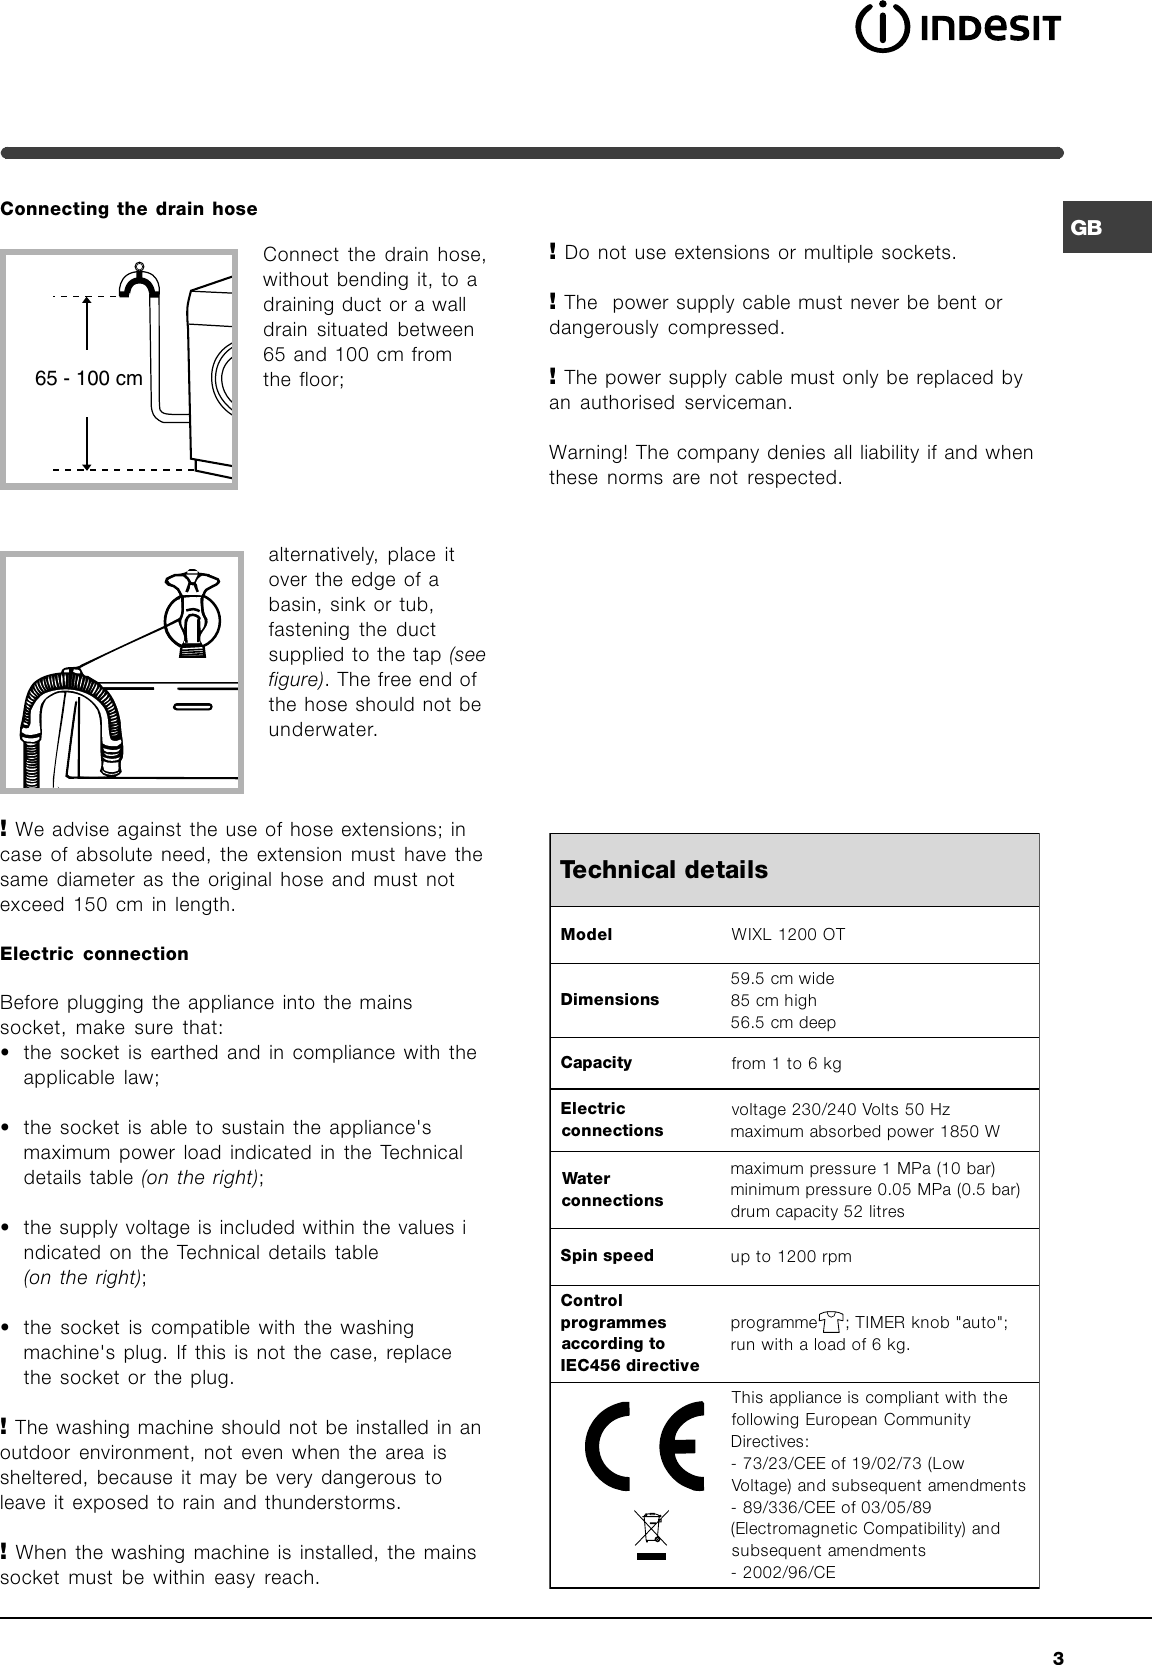 Page 3 of 12 - Indesit Indesit-Washing-Machine-Wixl-1200-Ot-Instruction-Manual- GB_WIXL 1200 OT (GB).p65  Indesit-washing-machine-wixl-1200-ot-instruction-manual